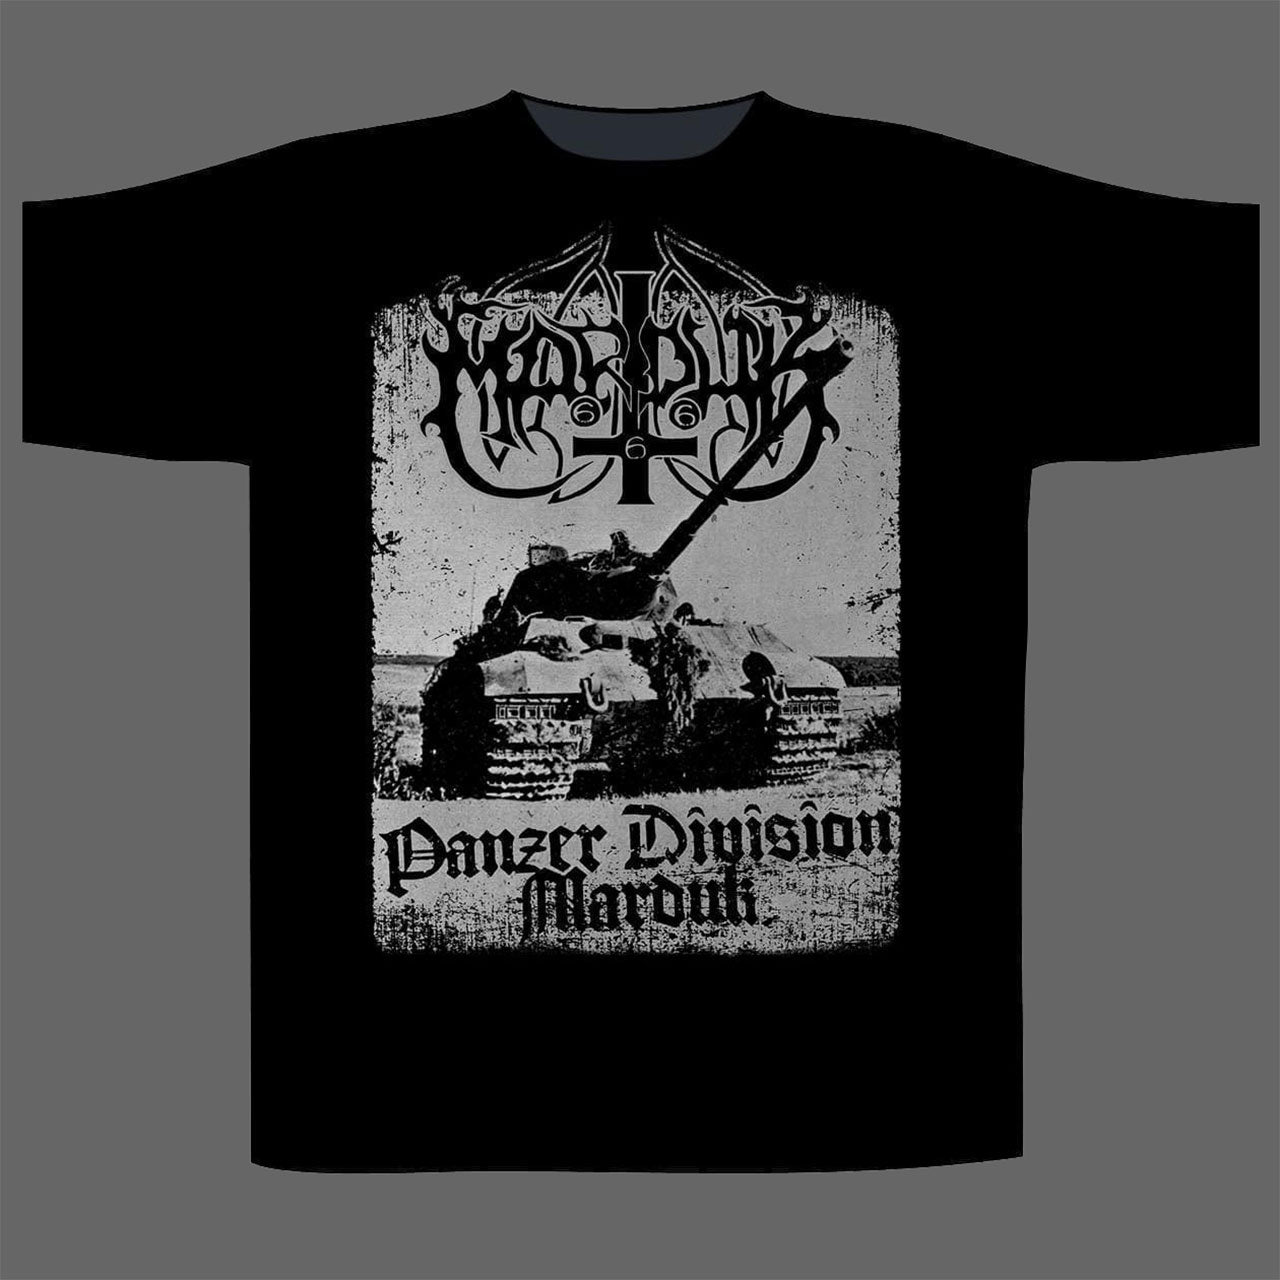 Marduk - Panzer Division Marduk (2020) (T-Shirt)